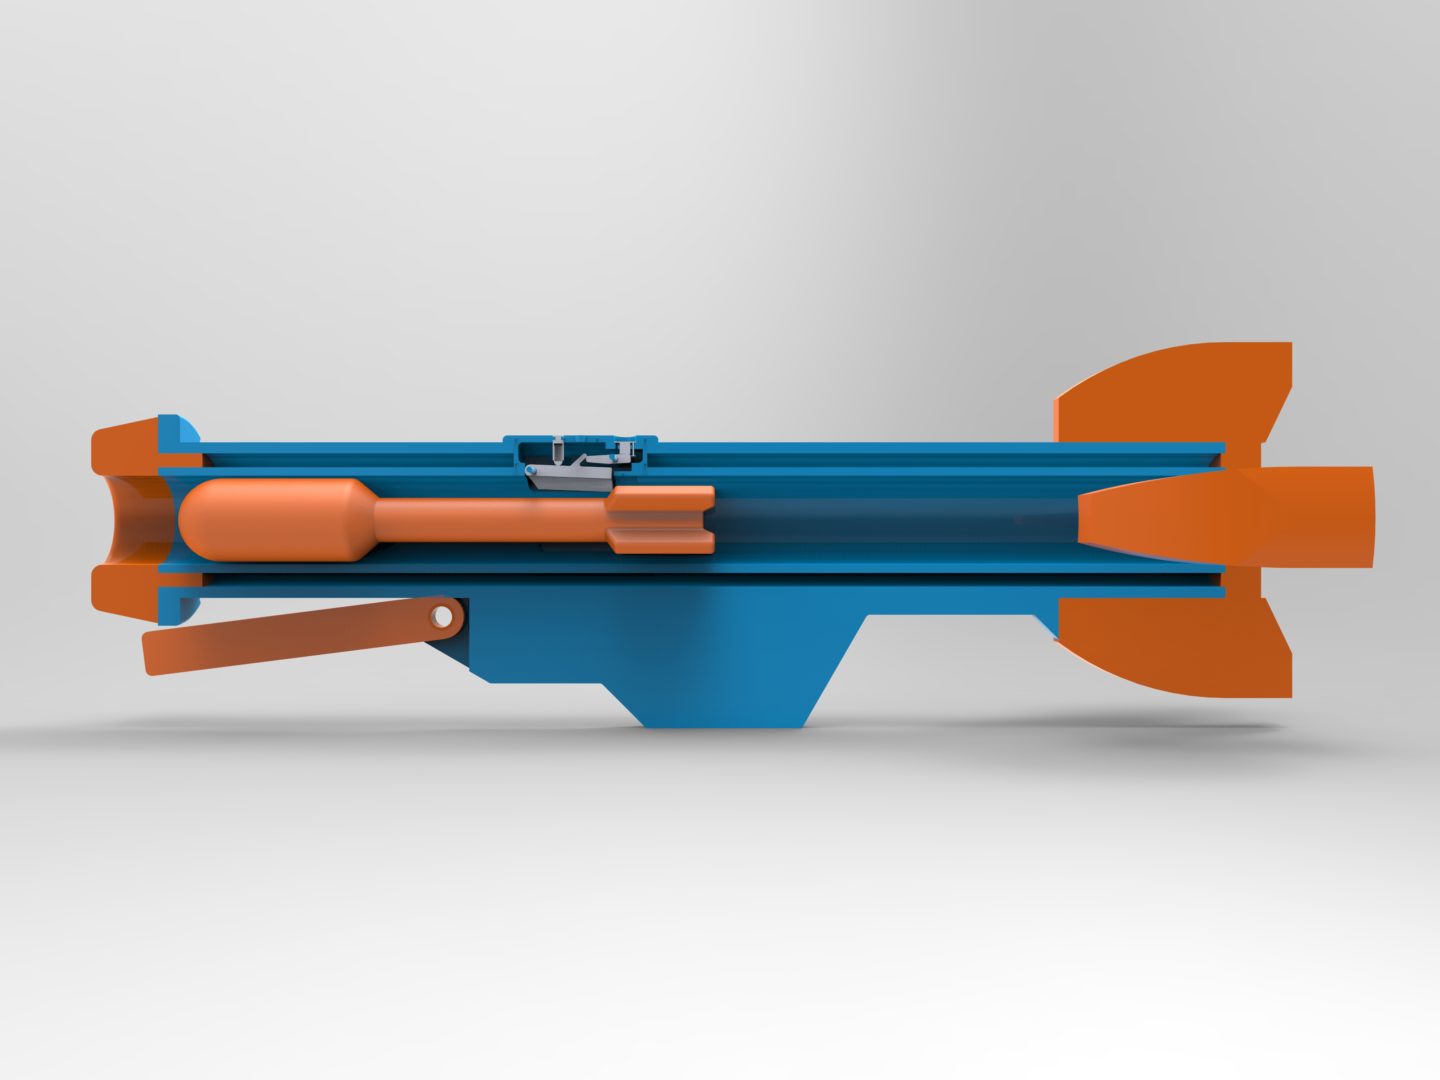 Titan_Foam_Rocket_Launcher_Render_Concept_Peterman_Design_Firm_cross_section_side